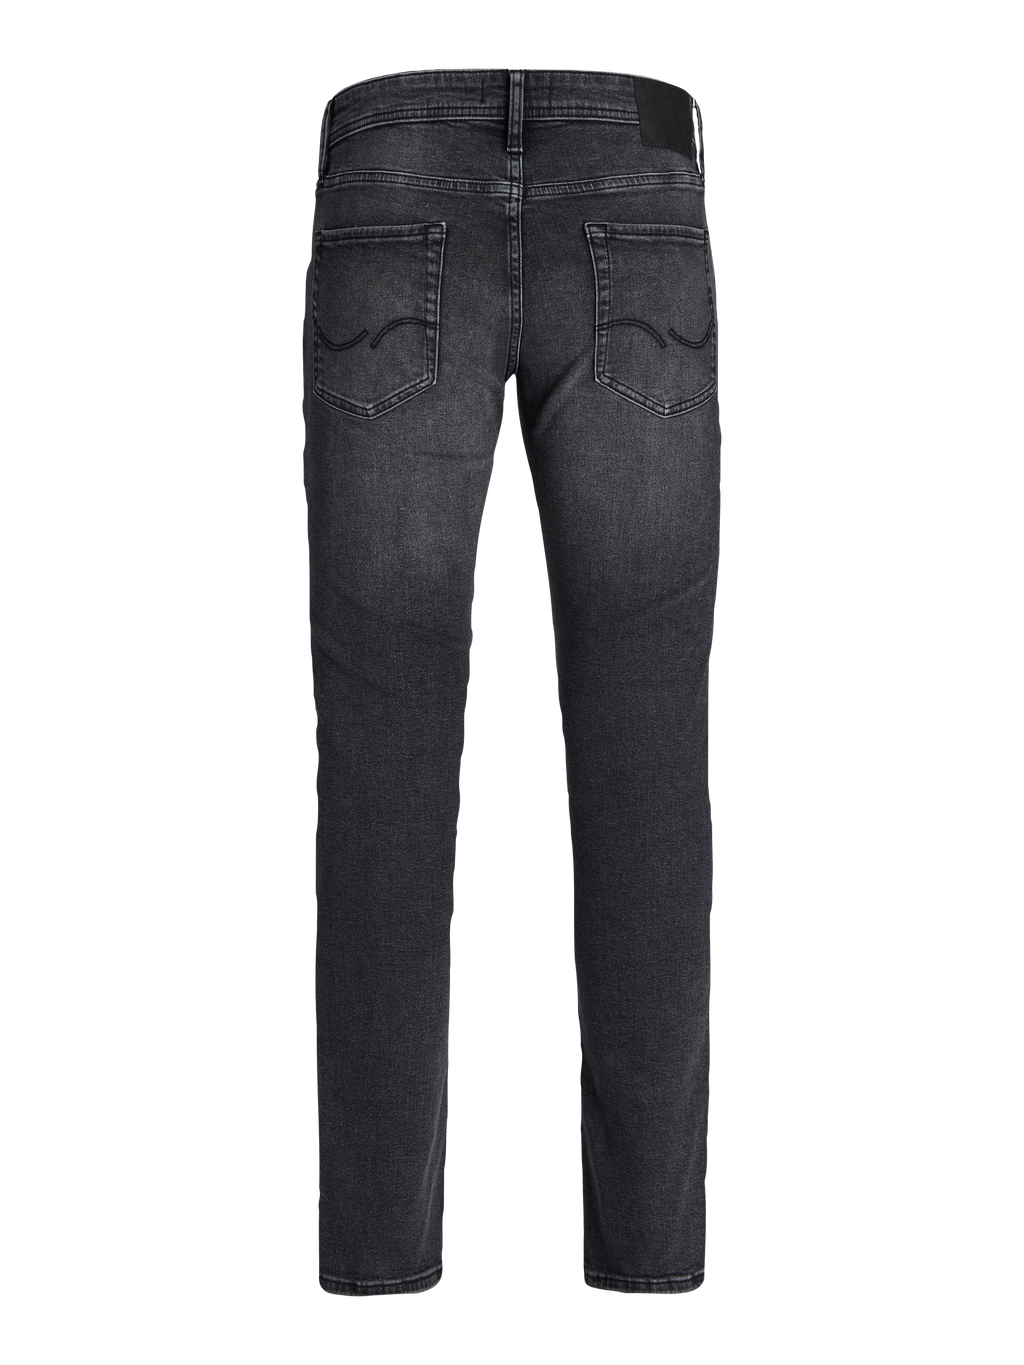 Glenn Original MF 621 Plus size slim fit jeans with 20% discount ...